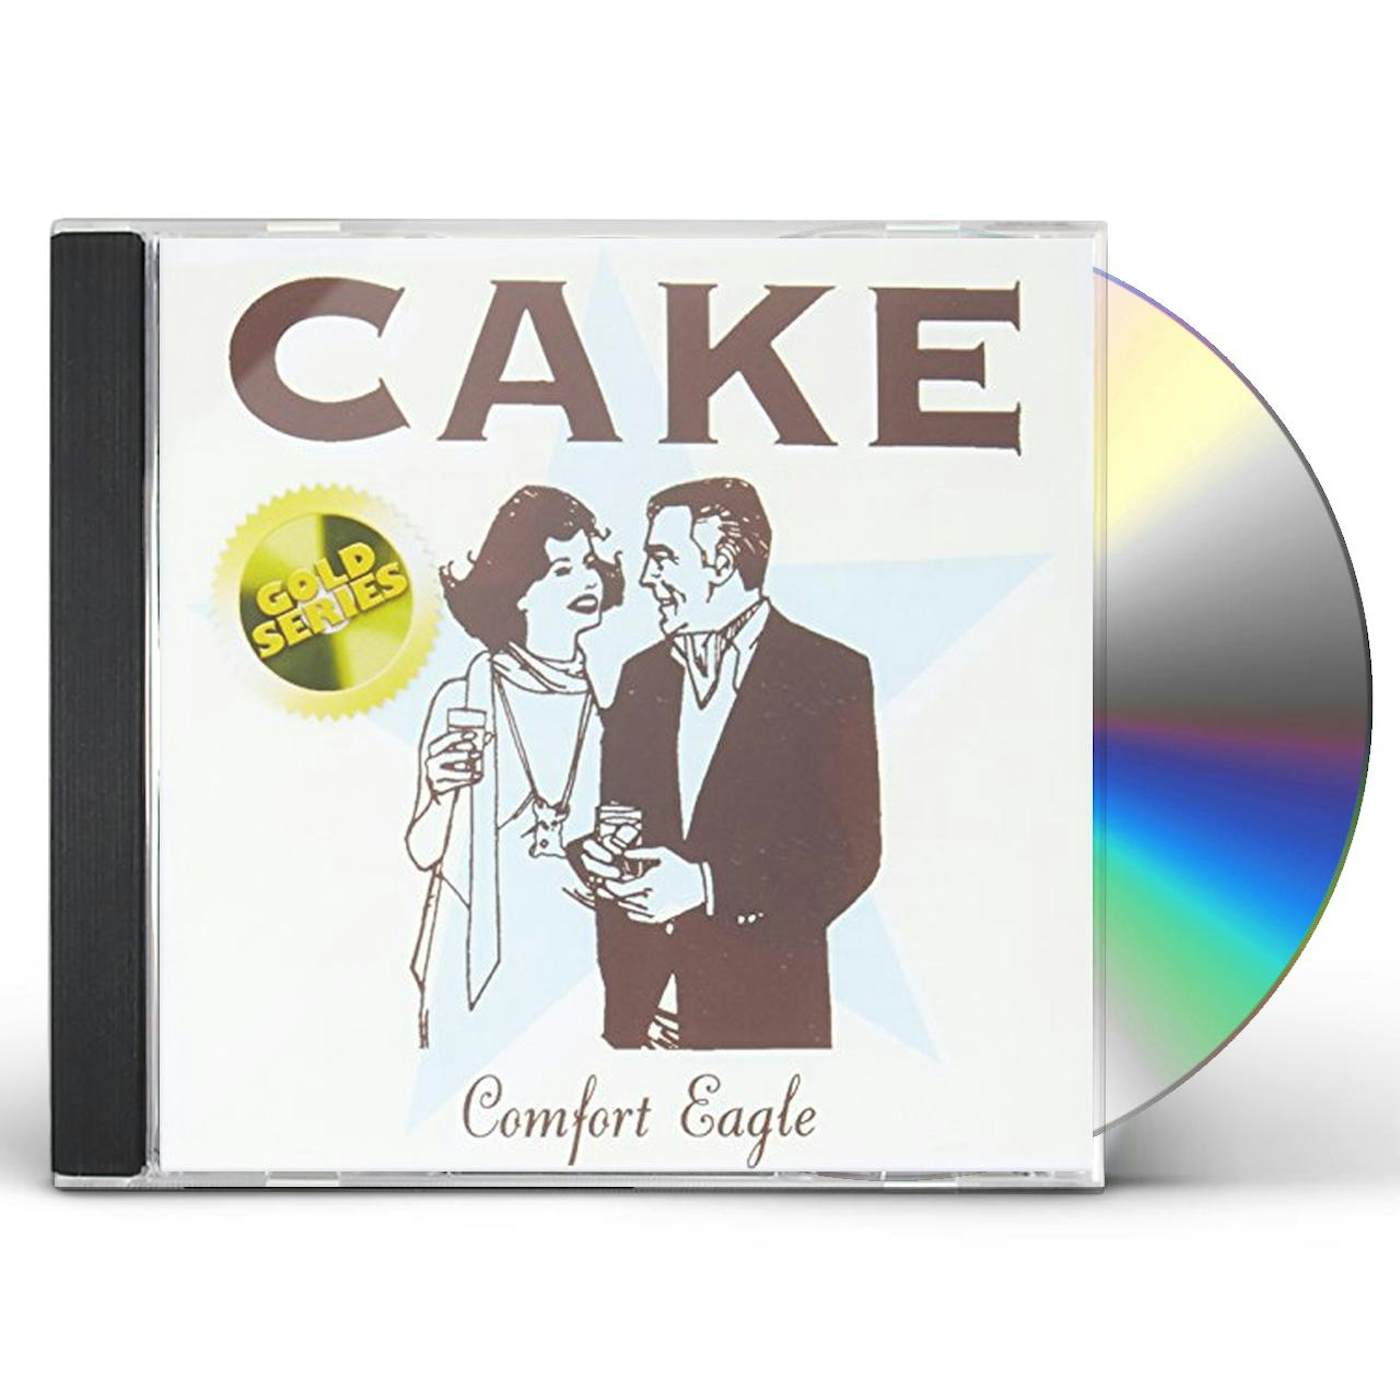 CAKE COMFORT EAGLE (GOLD SERIES) CD